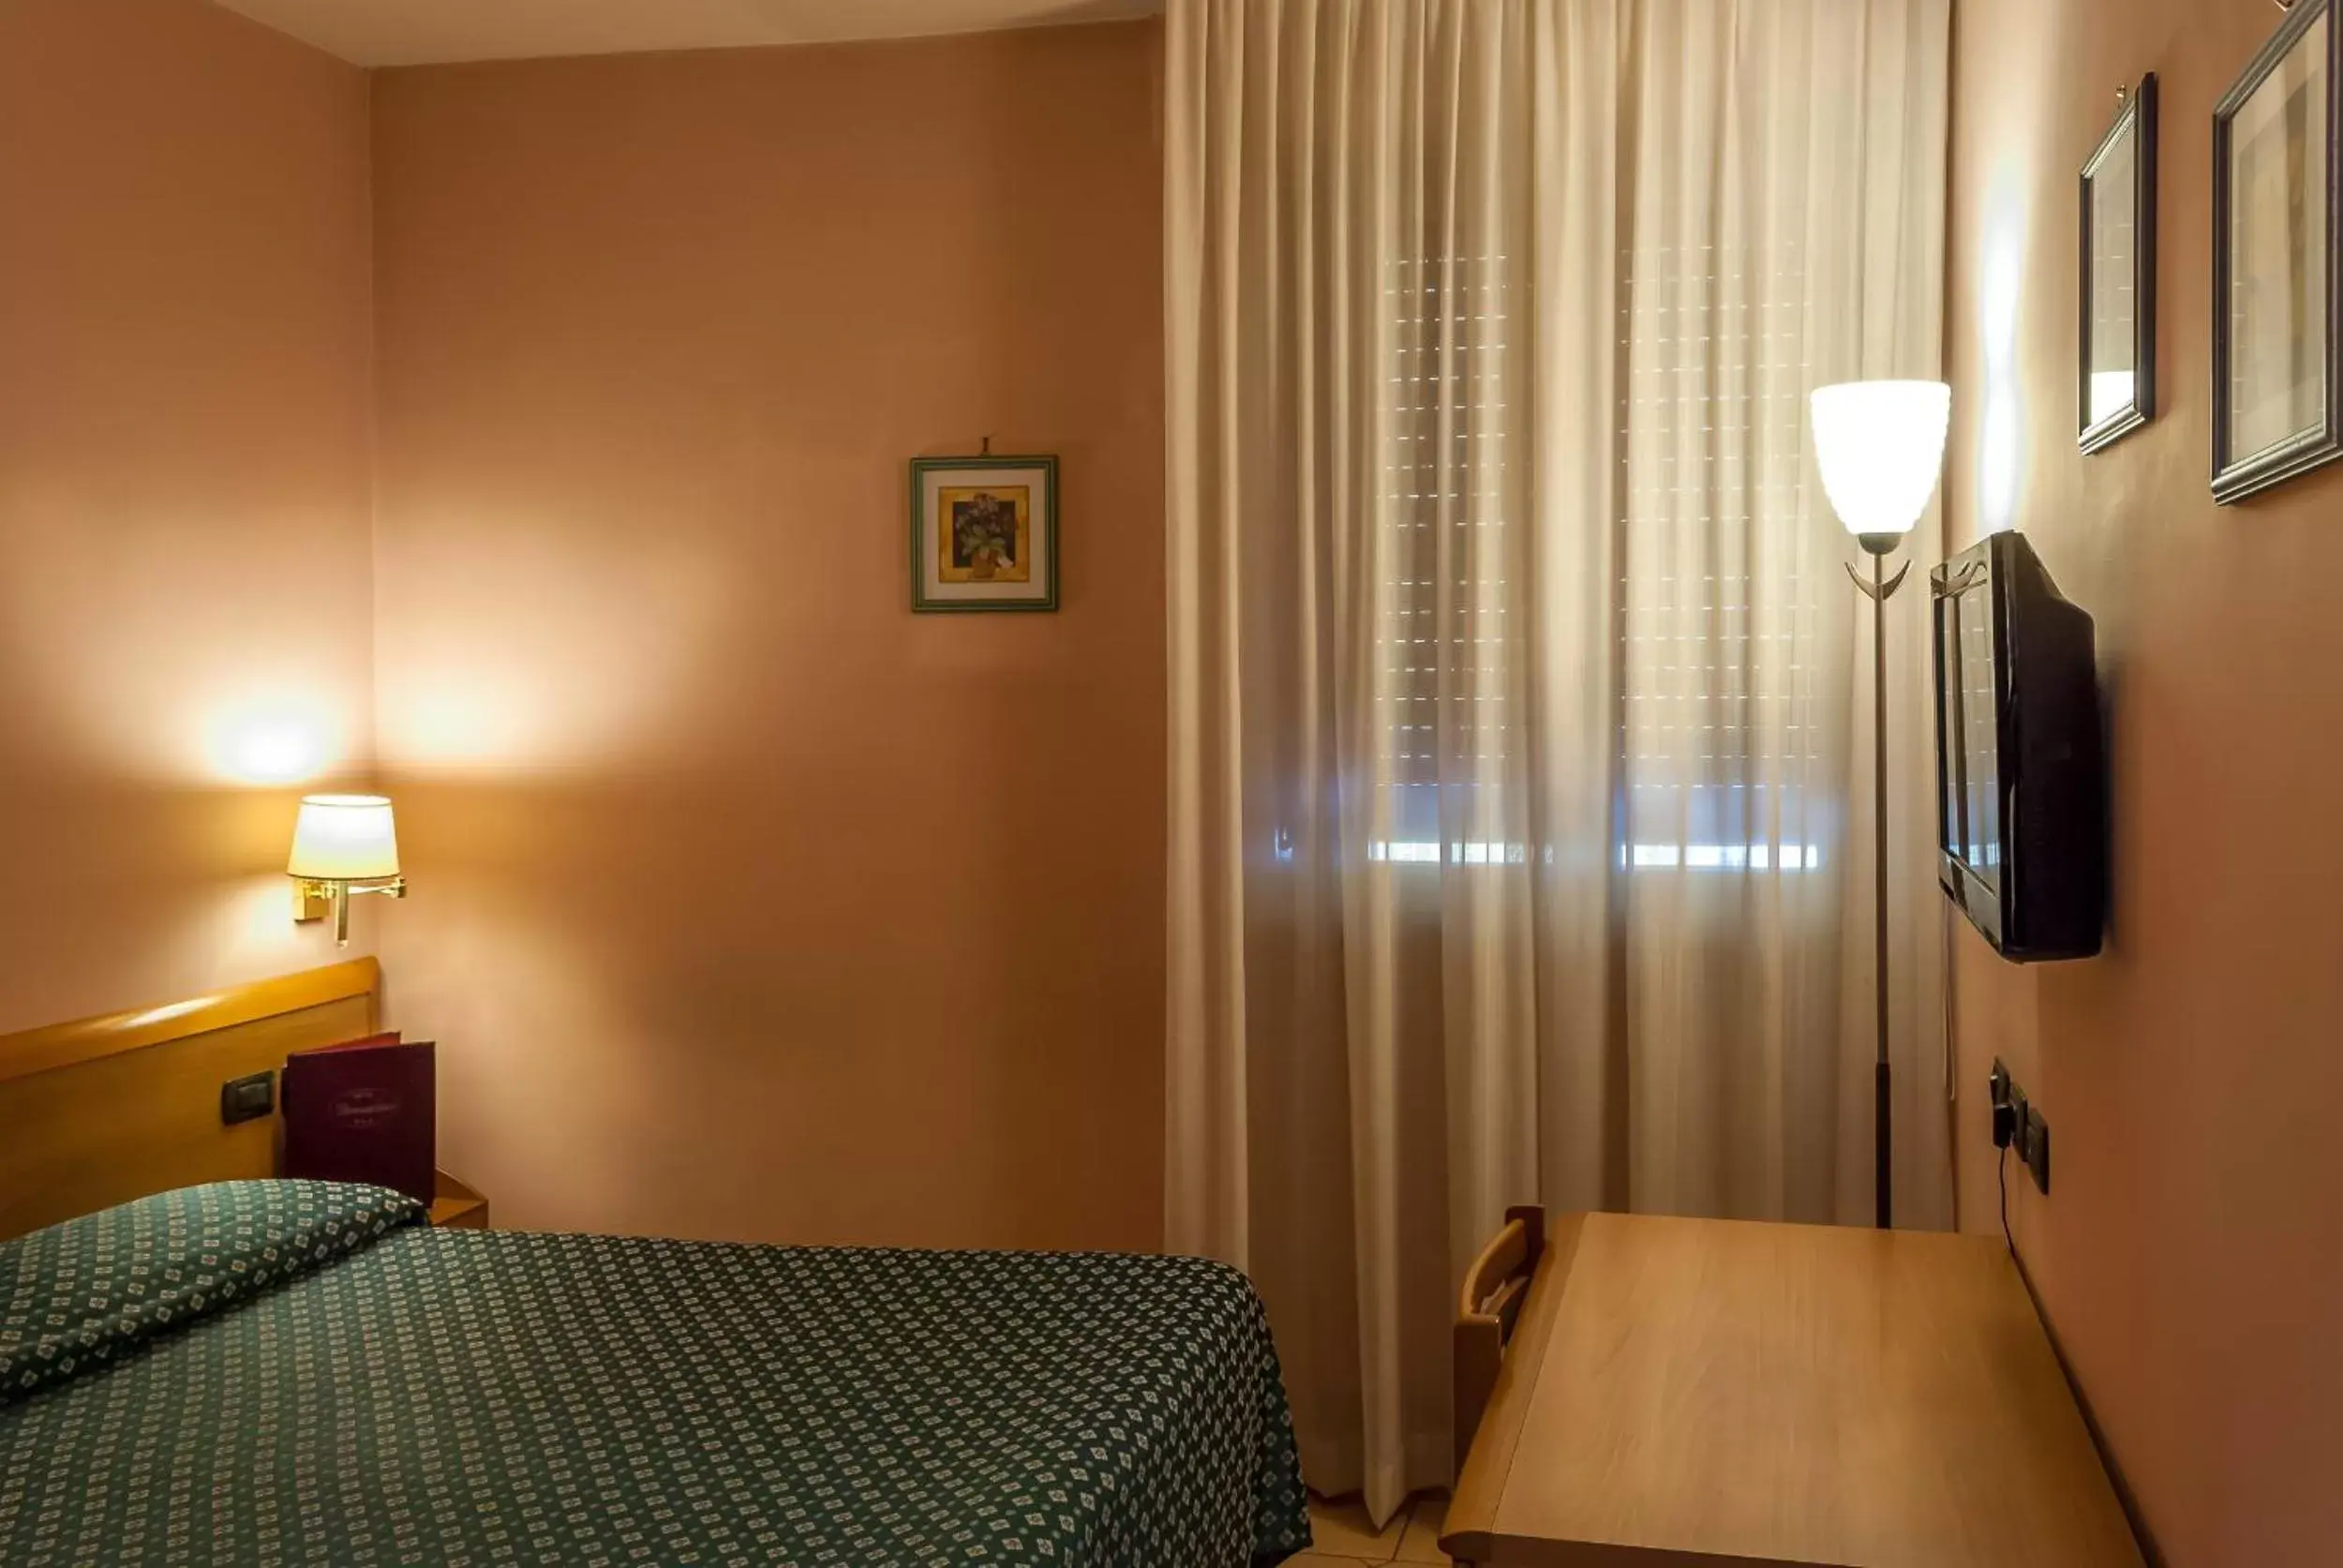 Bed, Room Photo in Hotel Bernardino